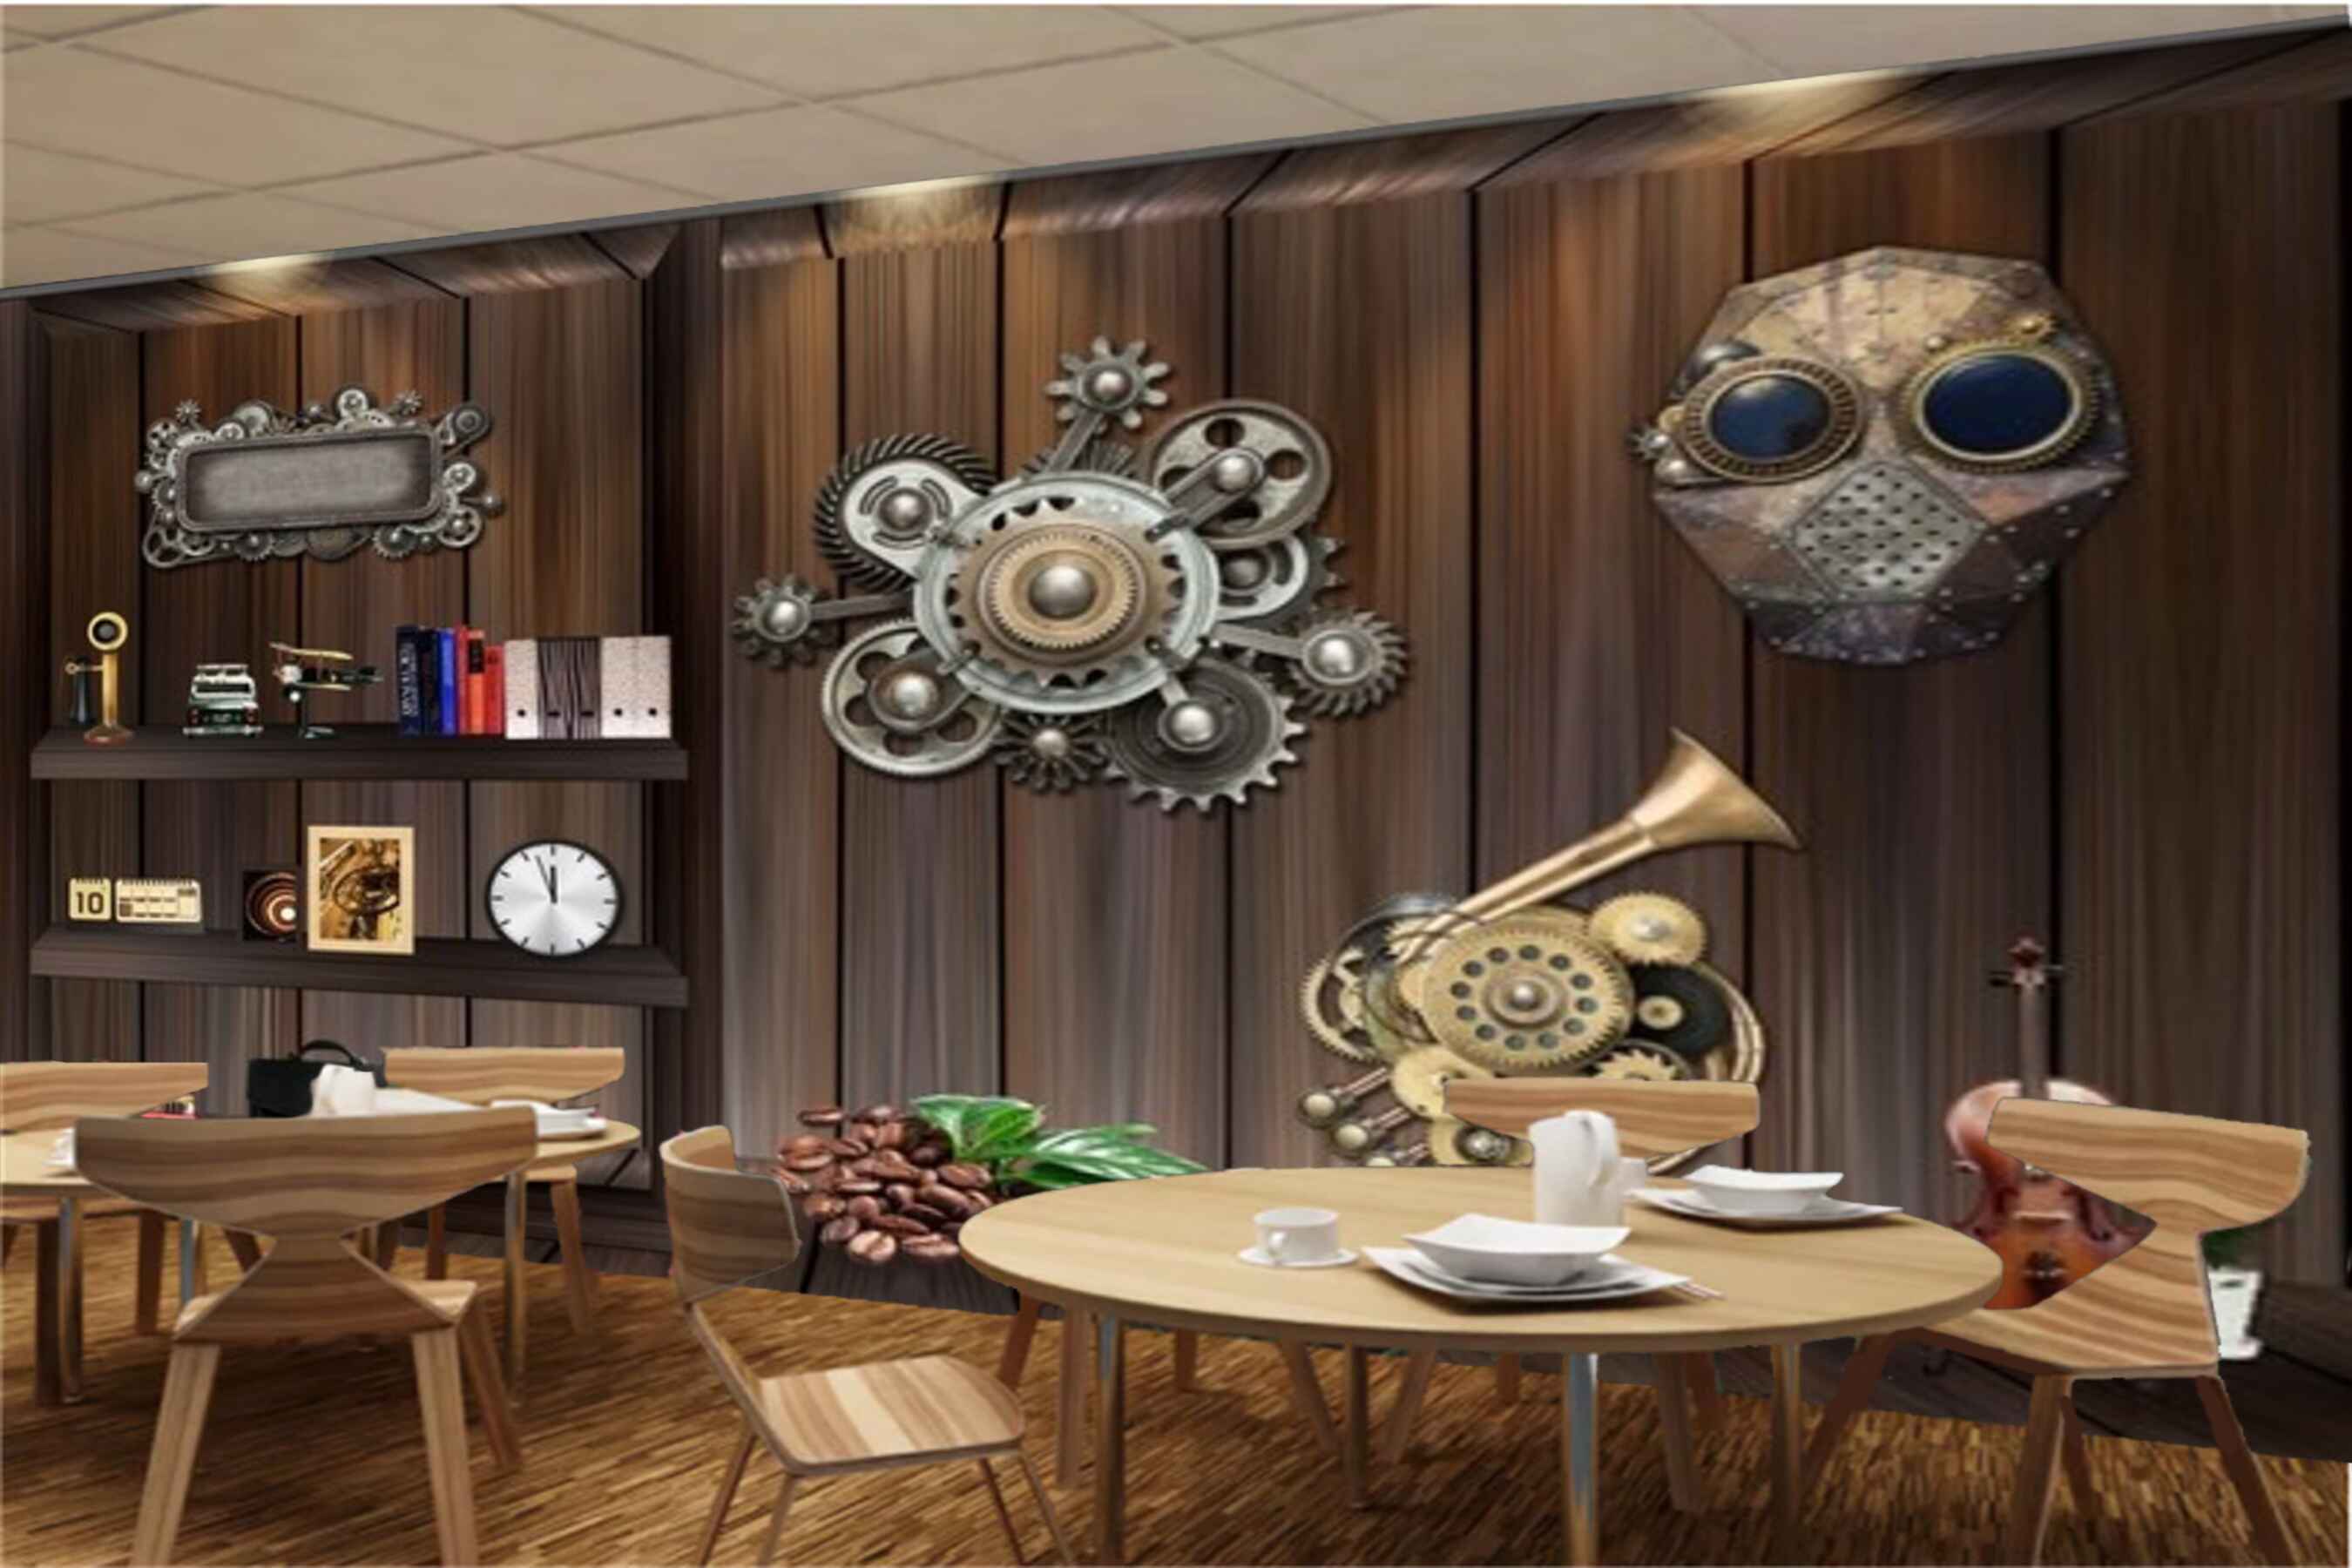 Avikalp MWZ3078 Coffee Beans Guitar Skull Wheels Screws HD Wallpaper for Cafe Restaurant